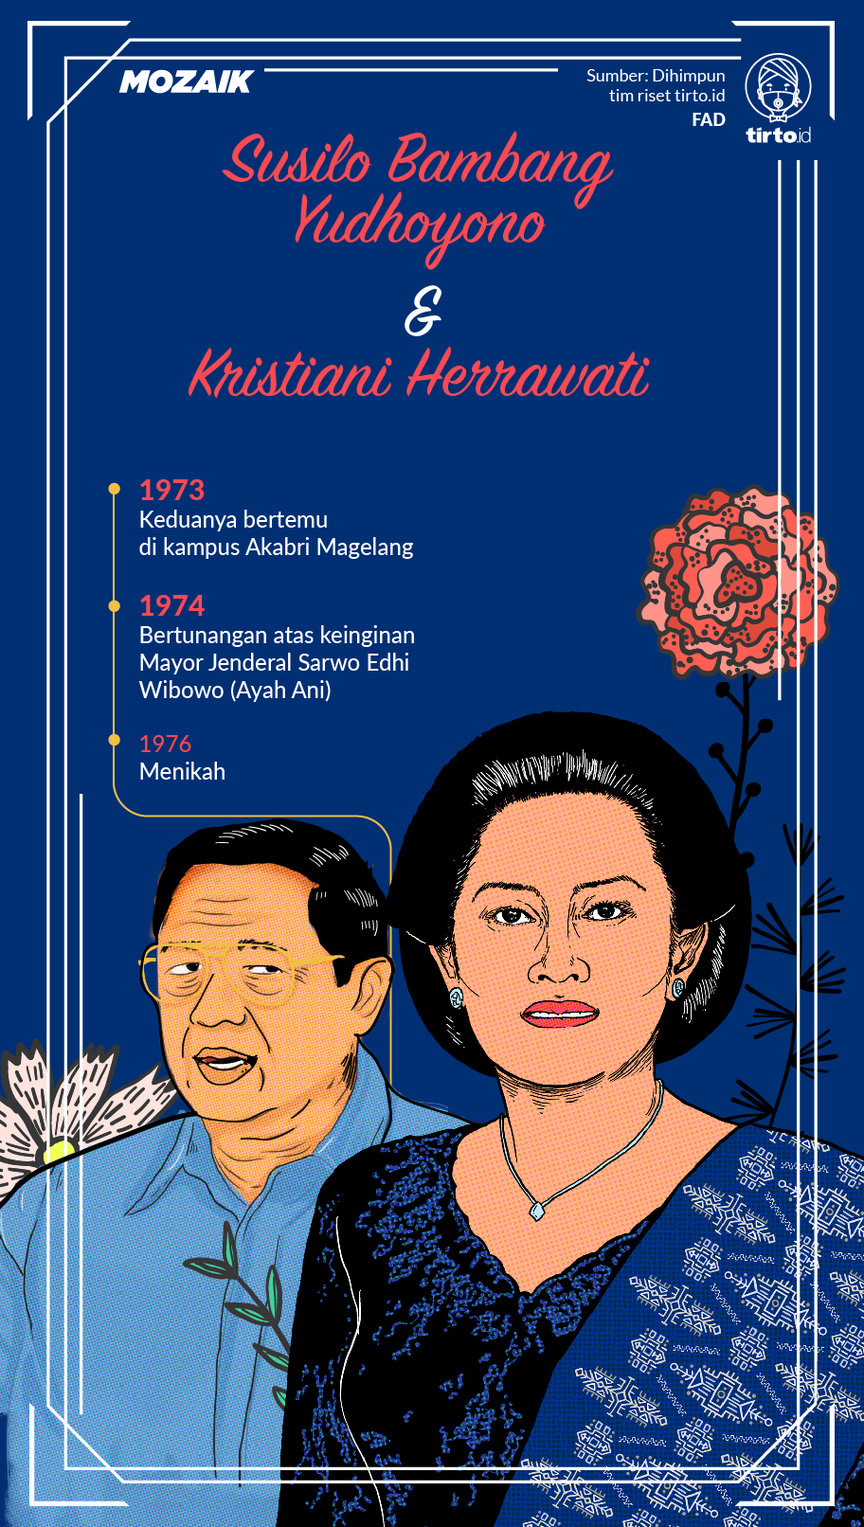 Infografik Mozaik SBY dan kristiani herrawati